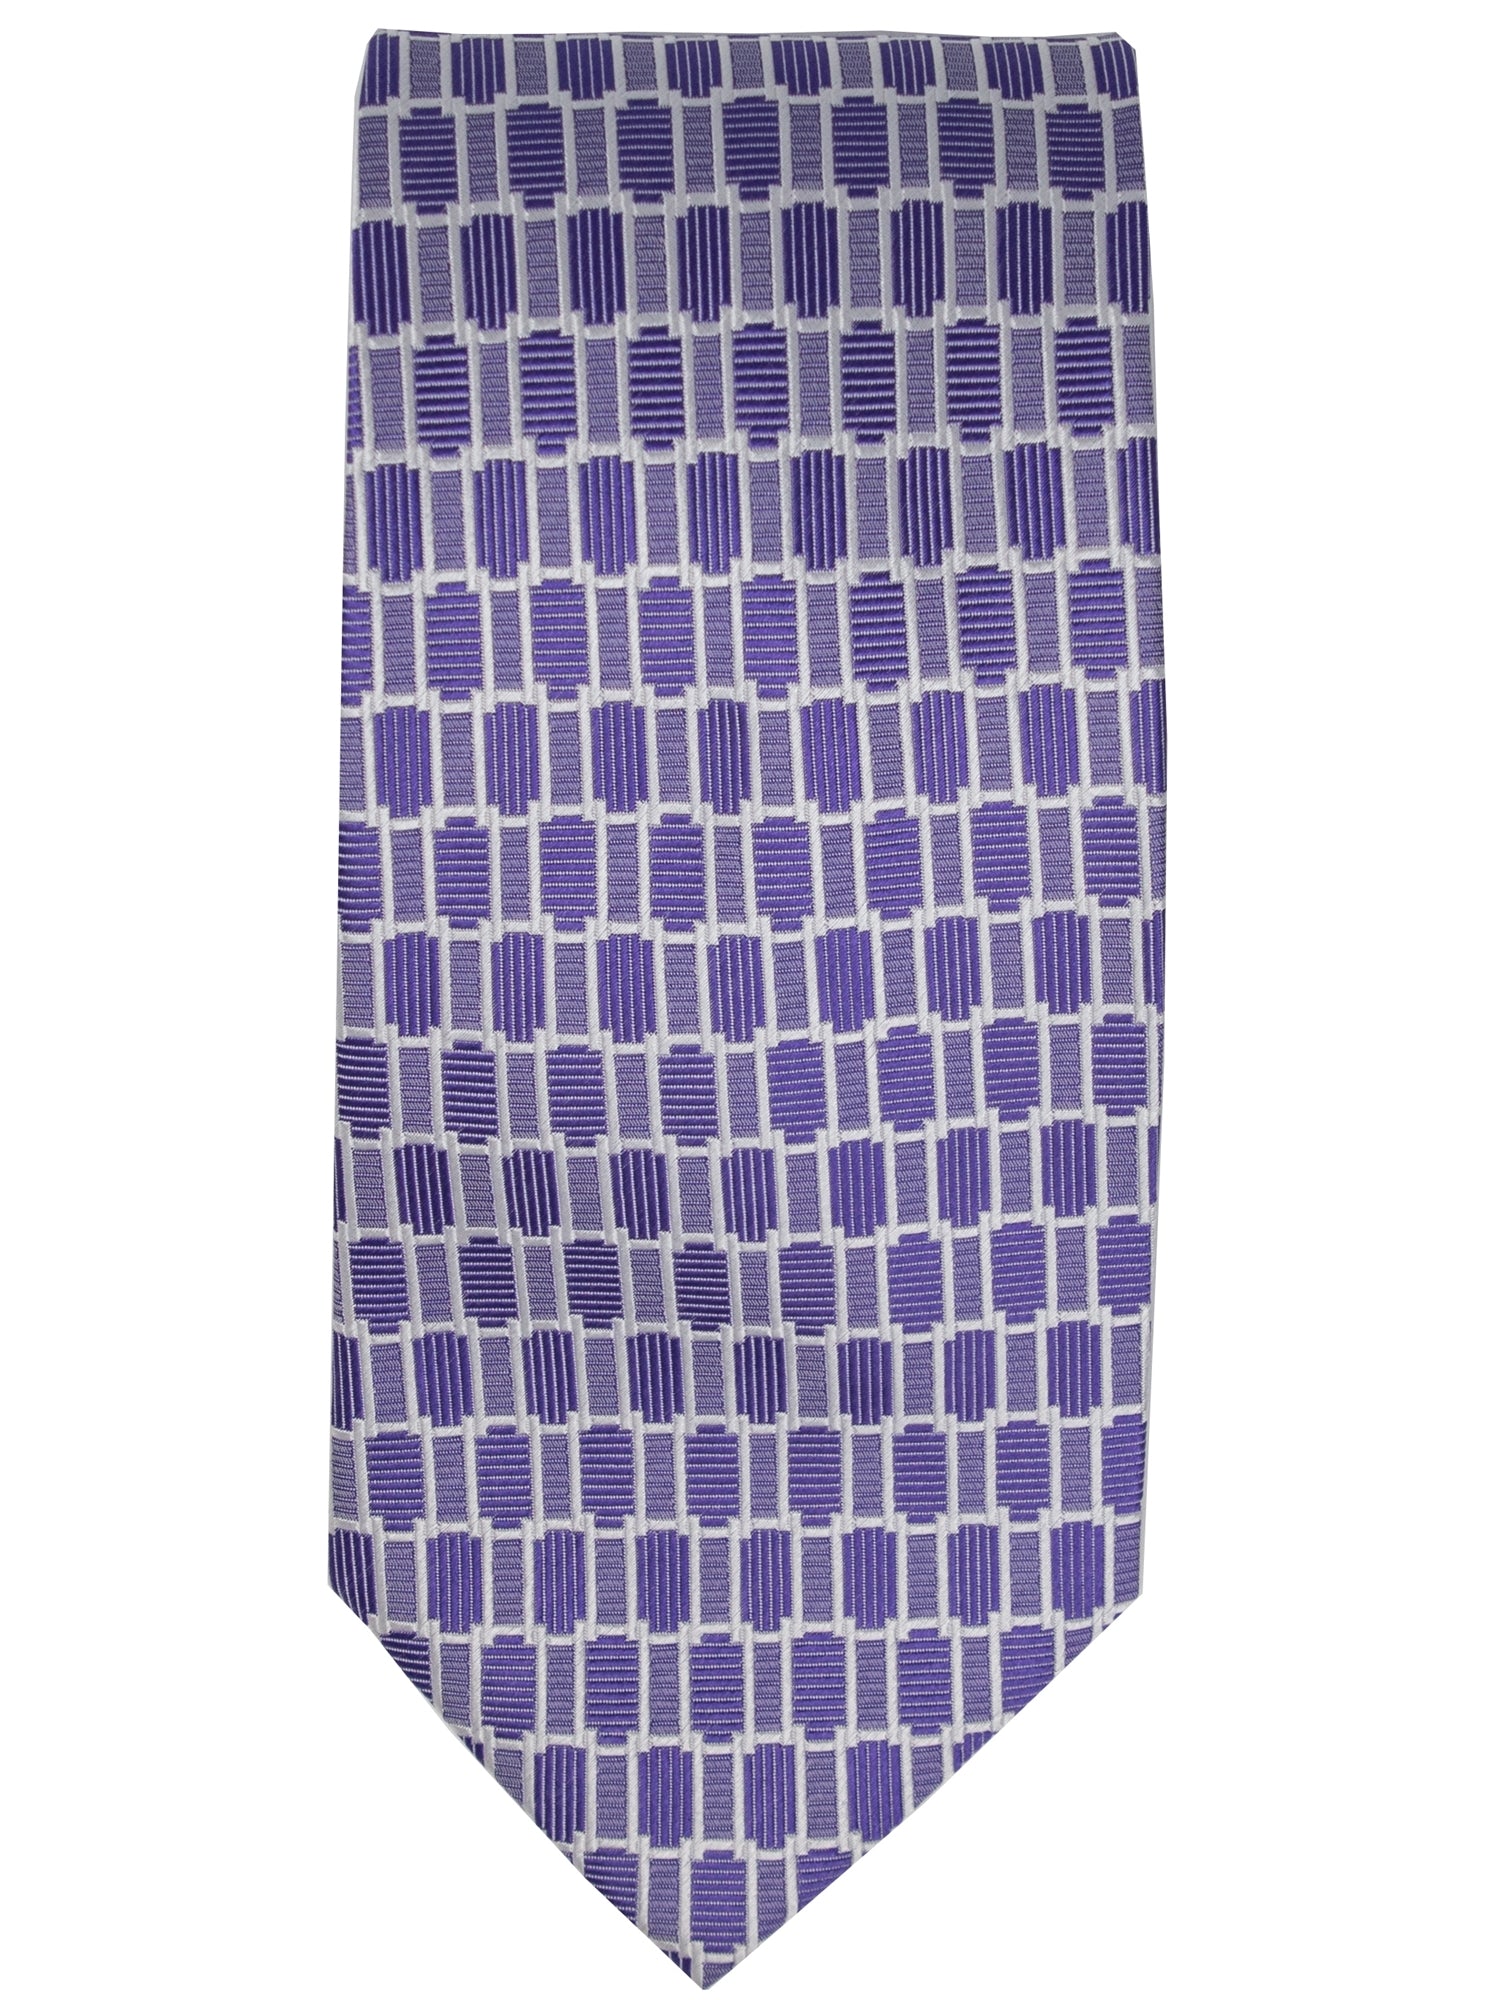 Men's Silk Woven Wedding Neck Tie Collection Neck Tie TheDapperTie Purple Geometric Regular 